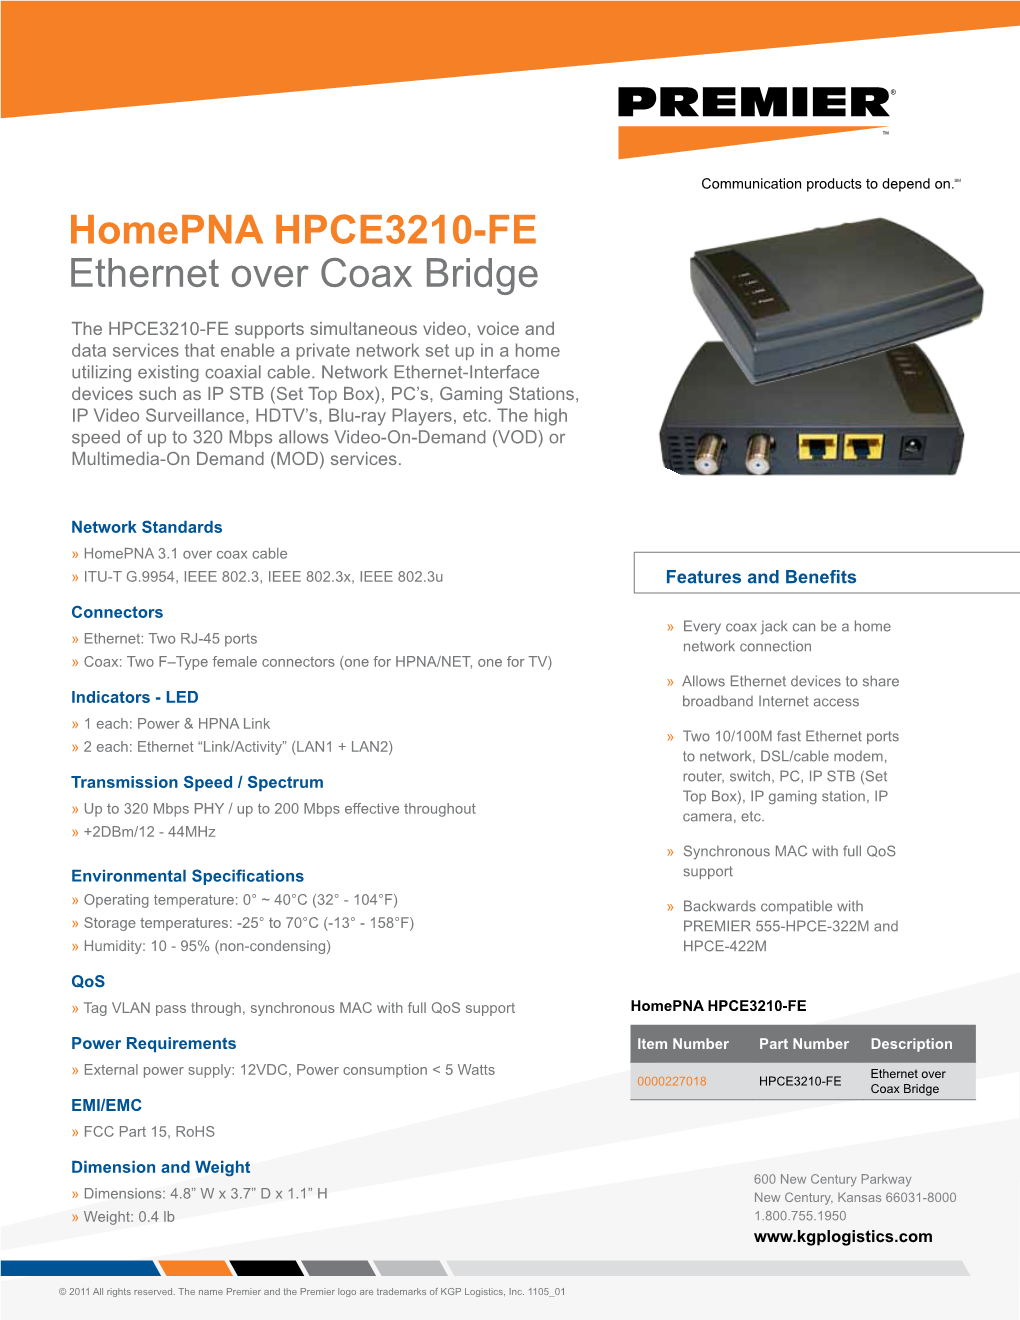 Homepna HPCE3210-FE Ethernet Over Coax Bridge